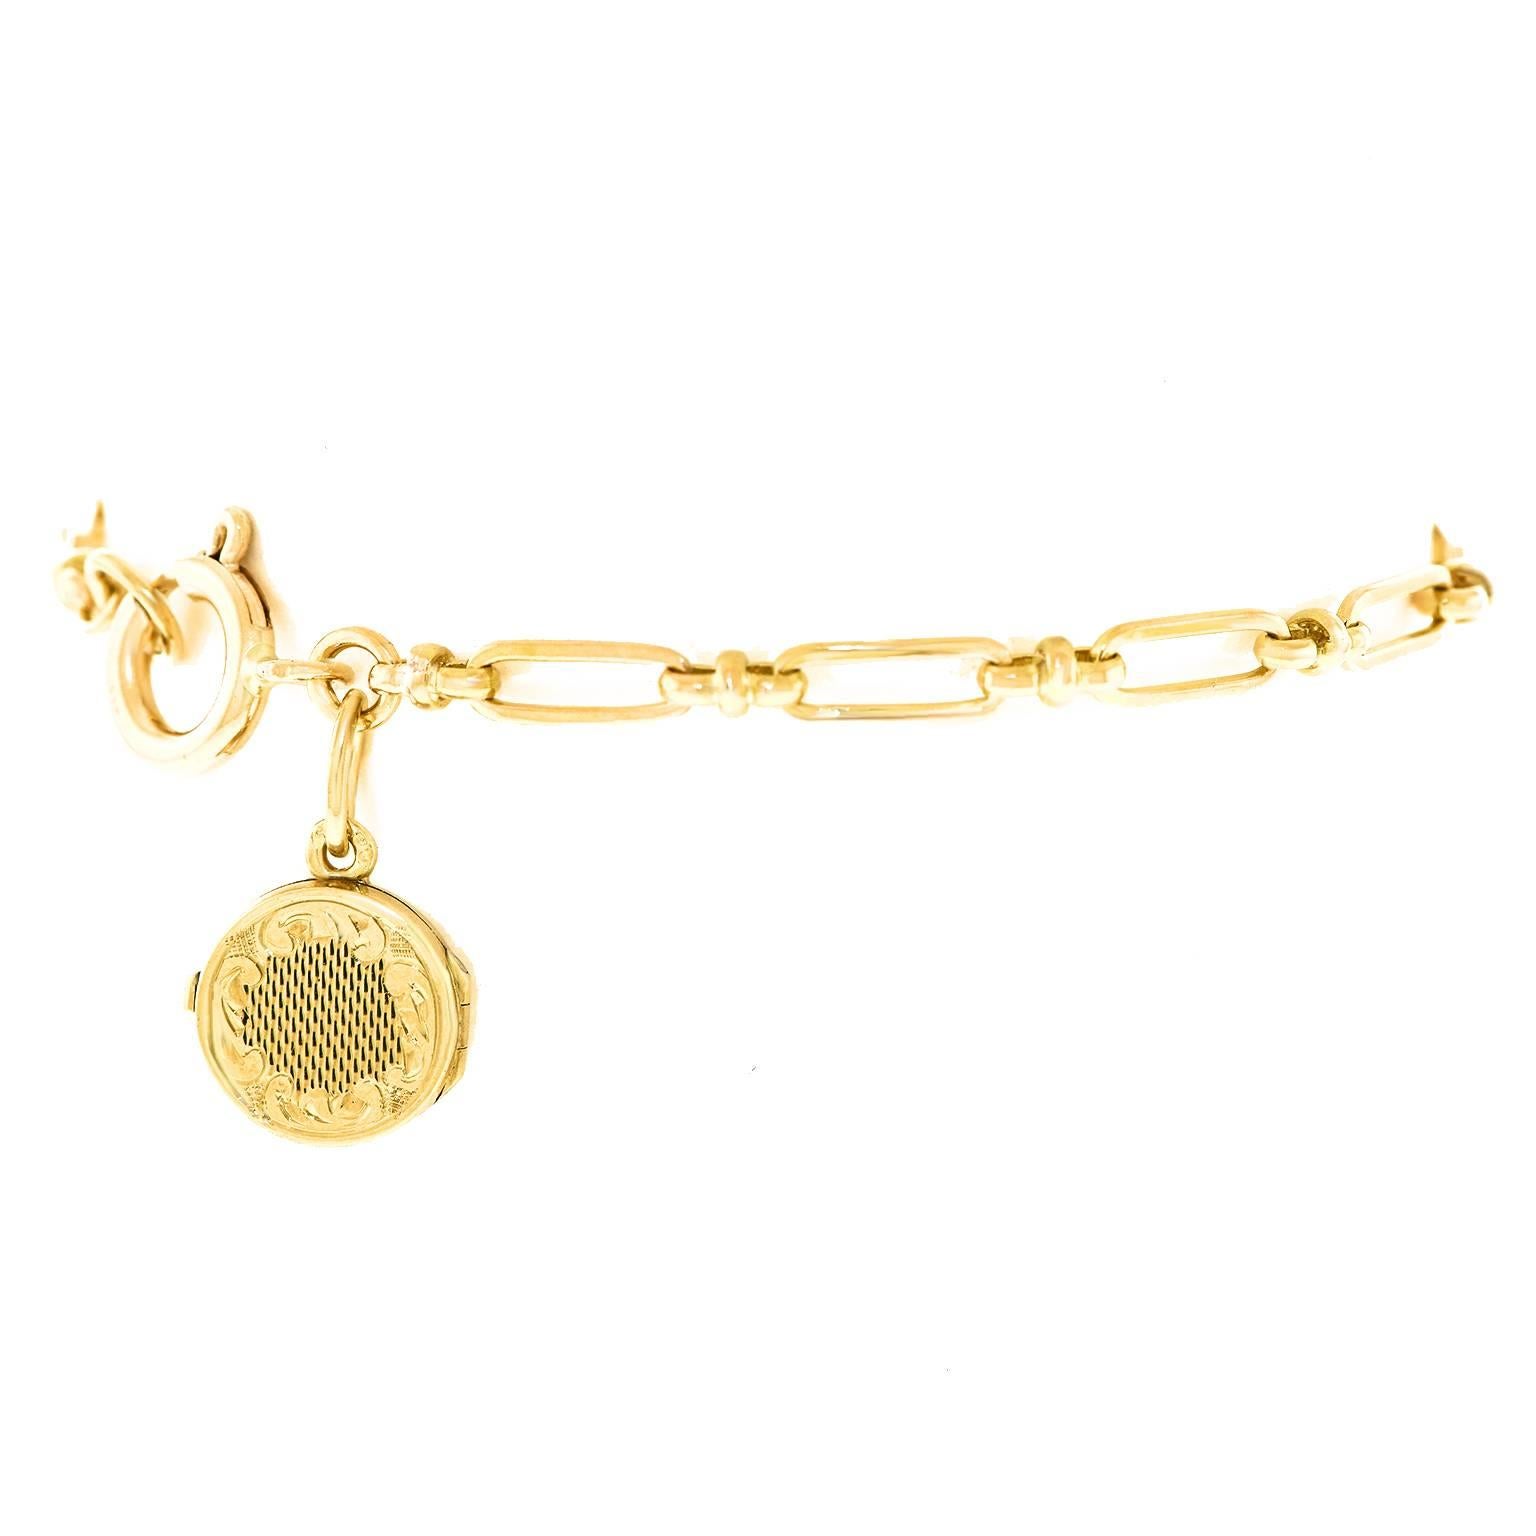 1890s Antique Gold Bracelet with Locket